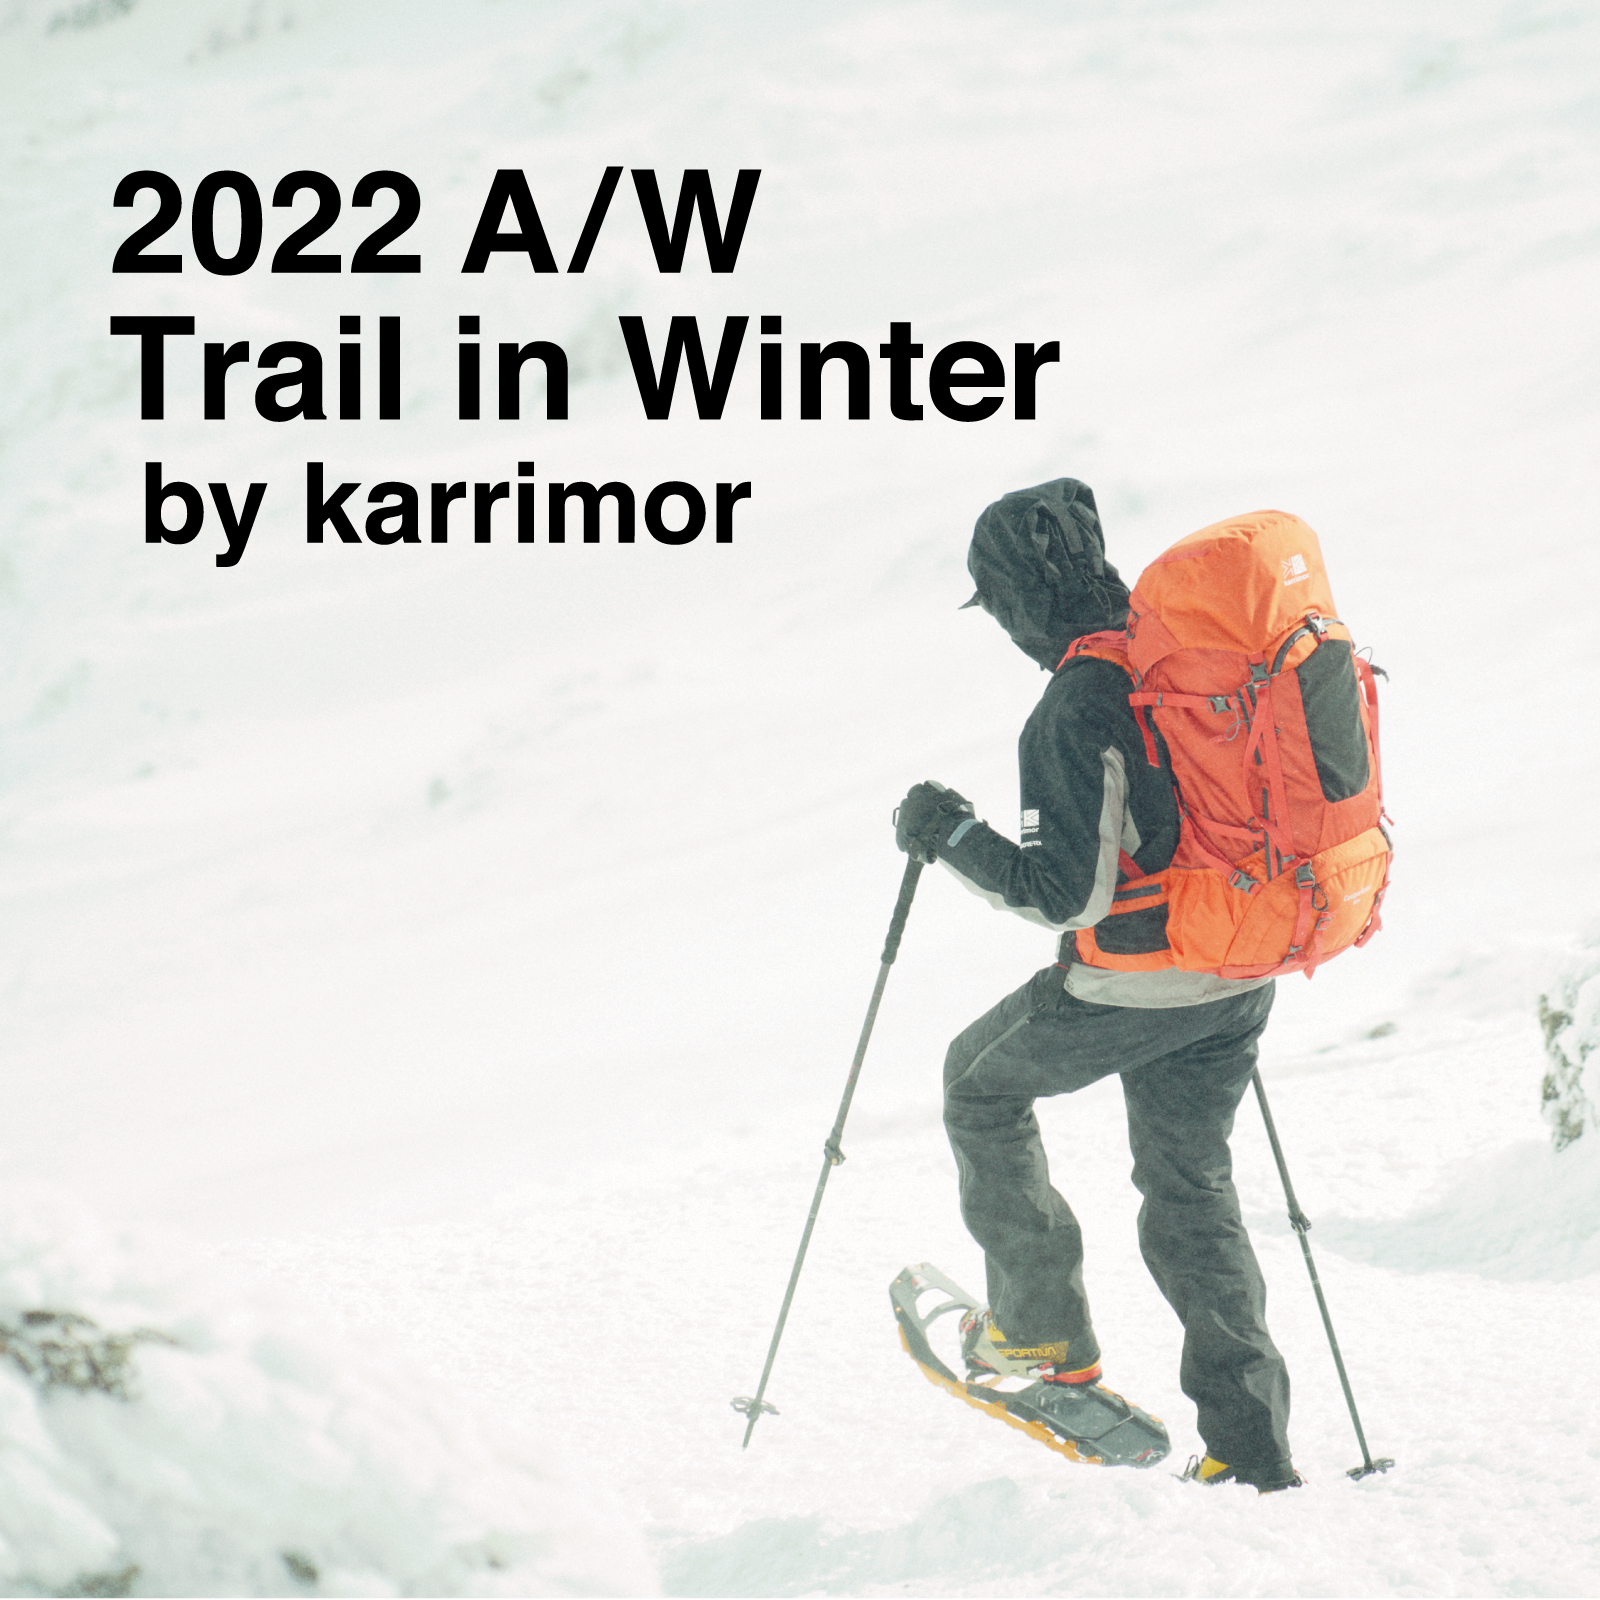 2022A/W Trail in Winter by karrimor